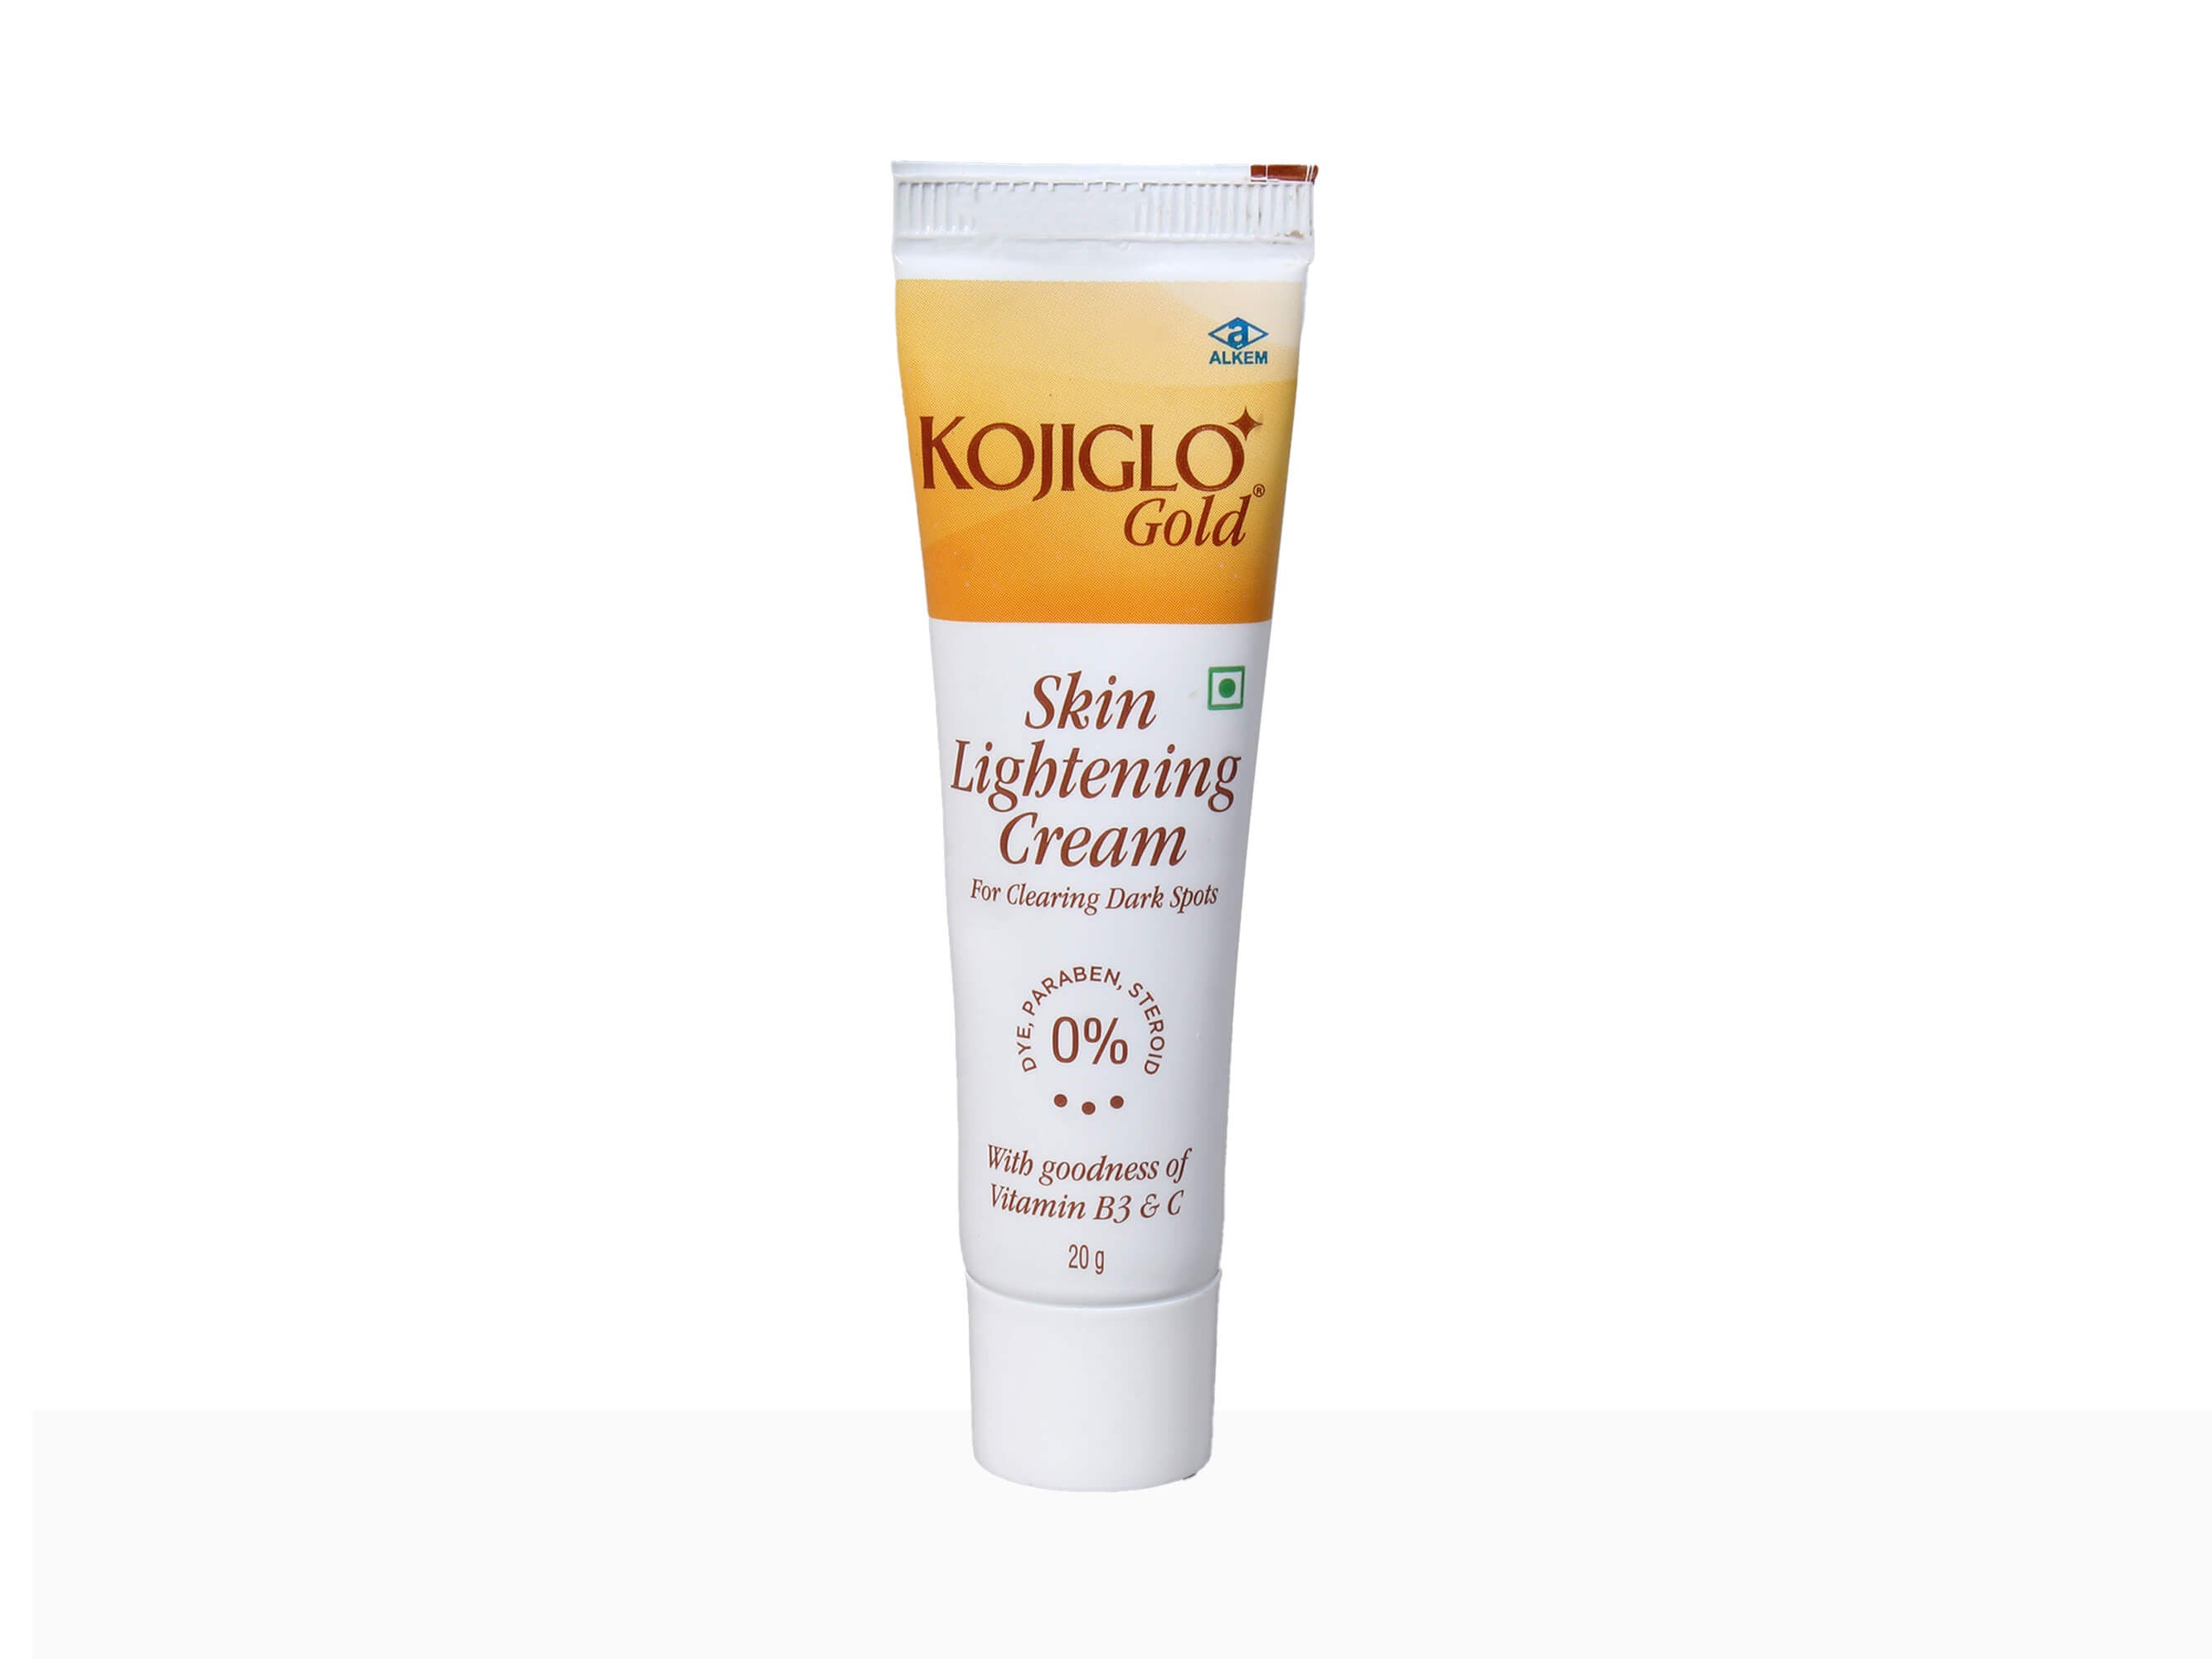 Kojiglo-Gold Cream - Clinikally